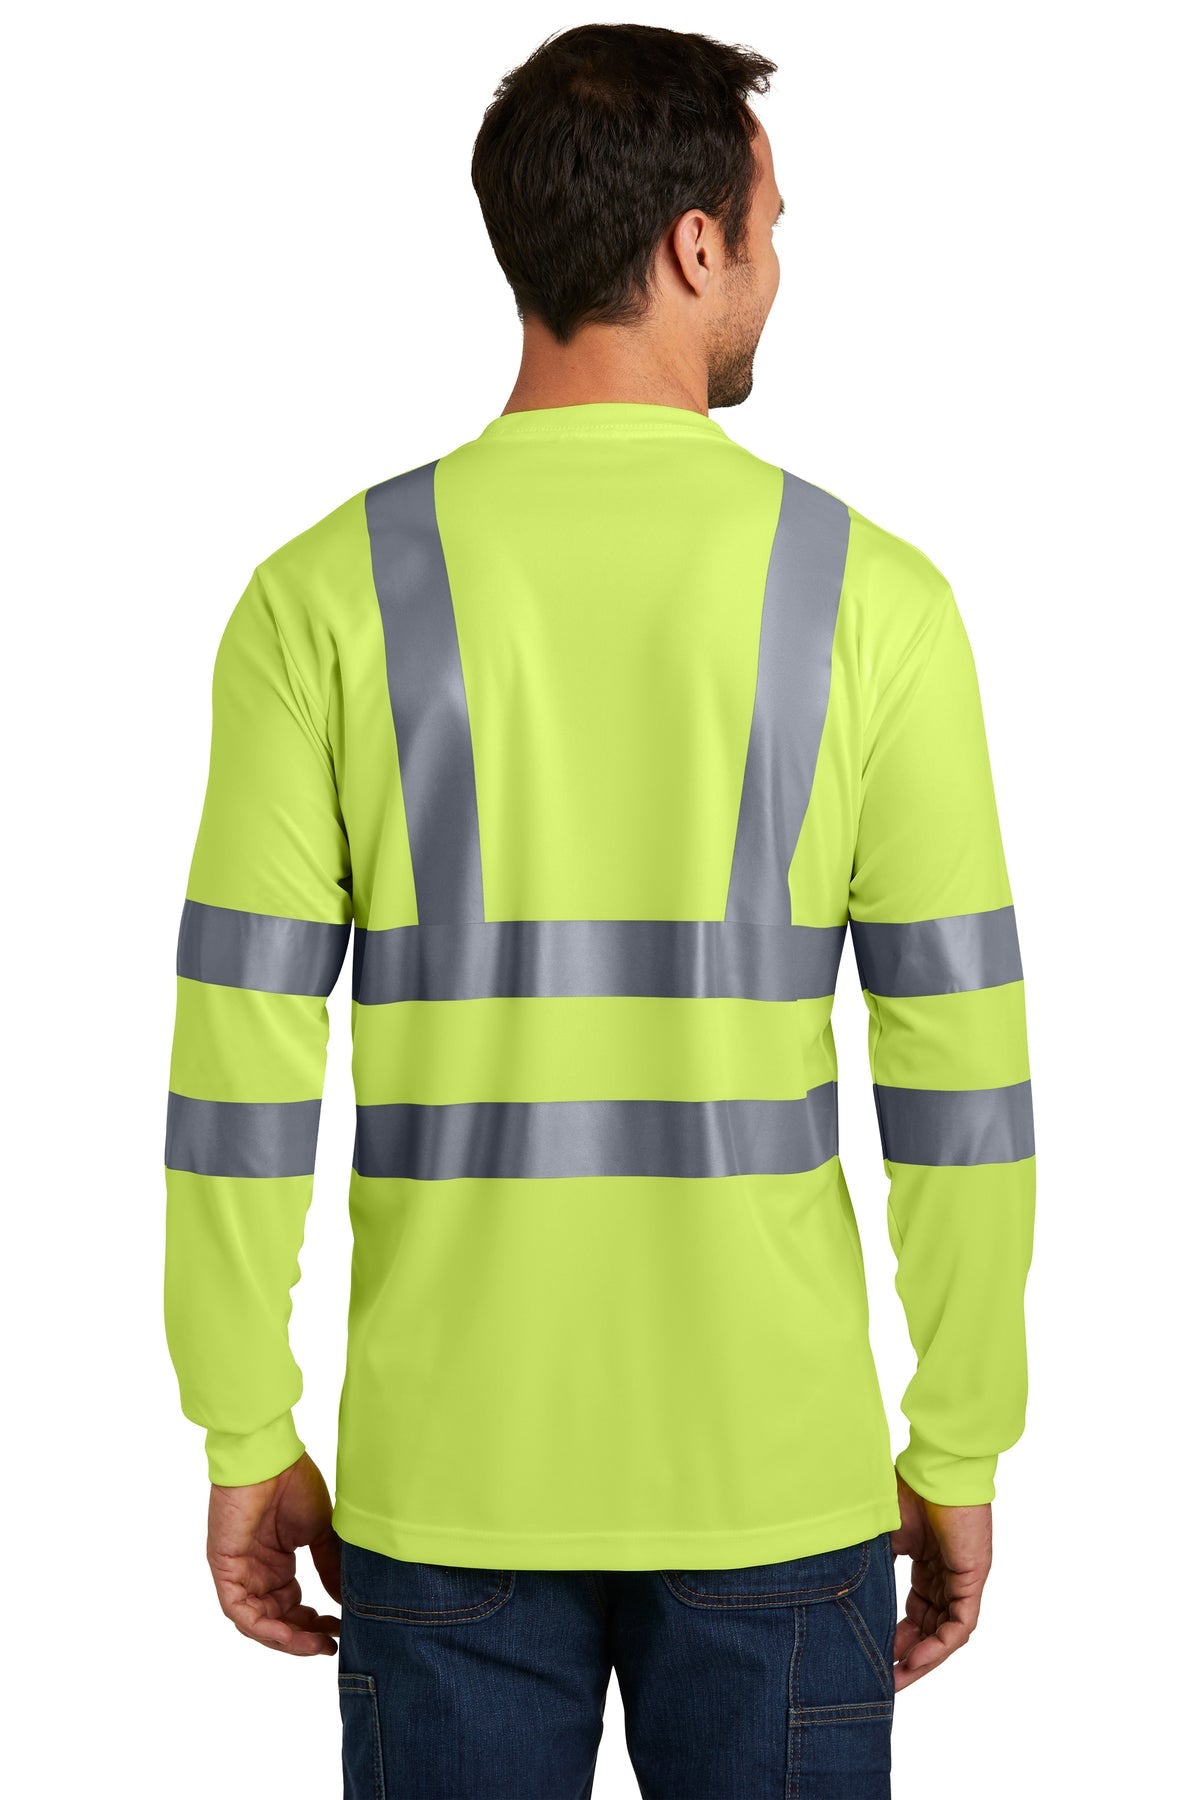 CornerStone - ANSI 107 Class 3 Long Sleeve Snag-Resistant Reflective T-Shirt